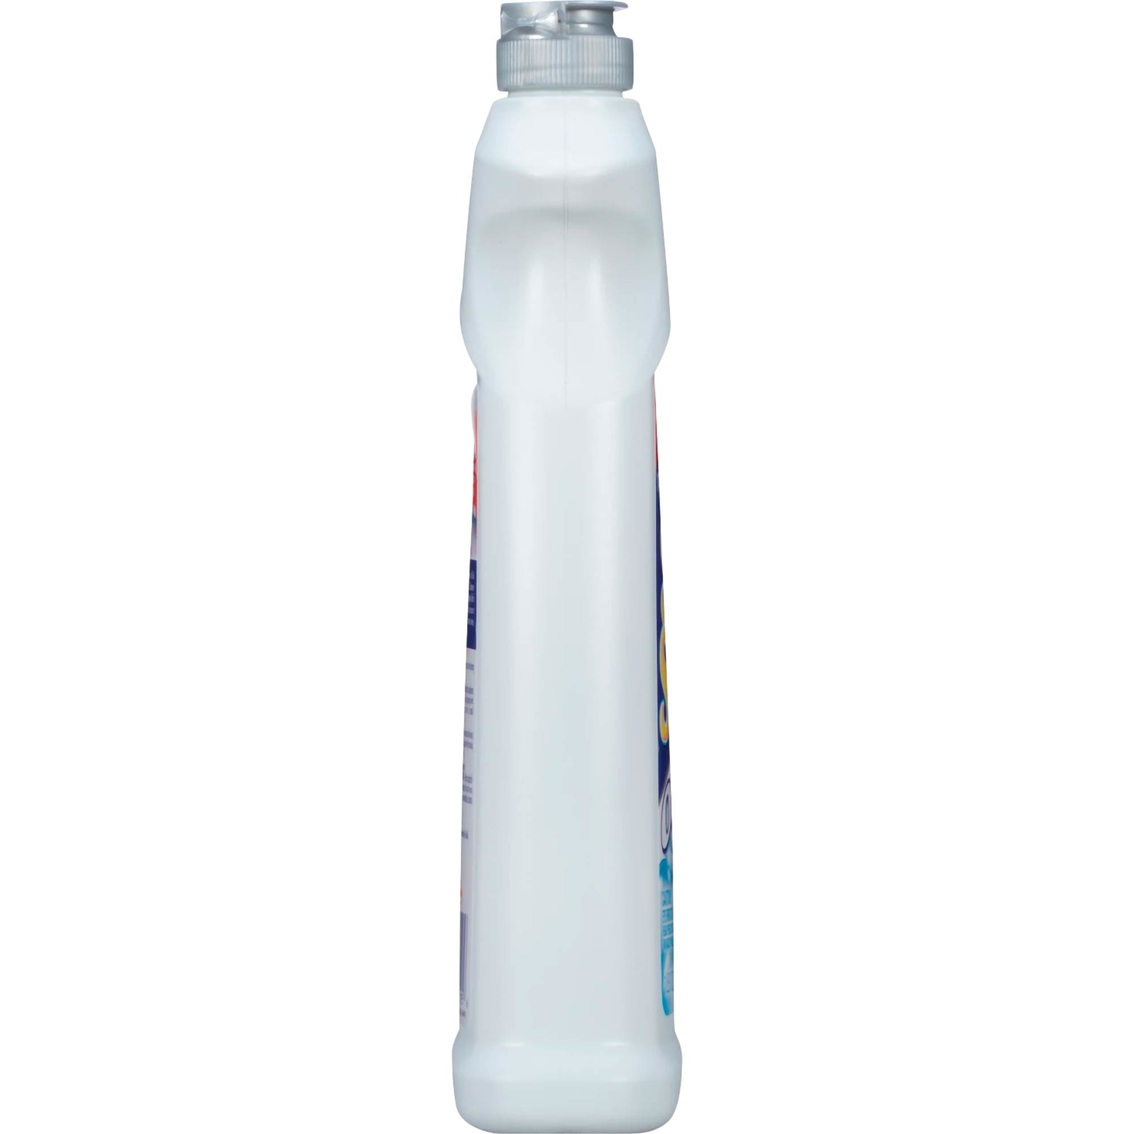 Soft Scrub Oxi Cleanser 24 oz. Bottle - Image 4 of 4